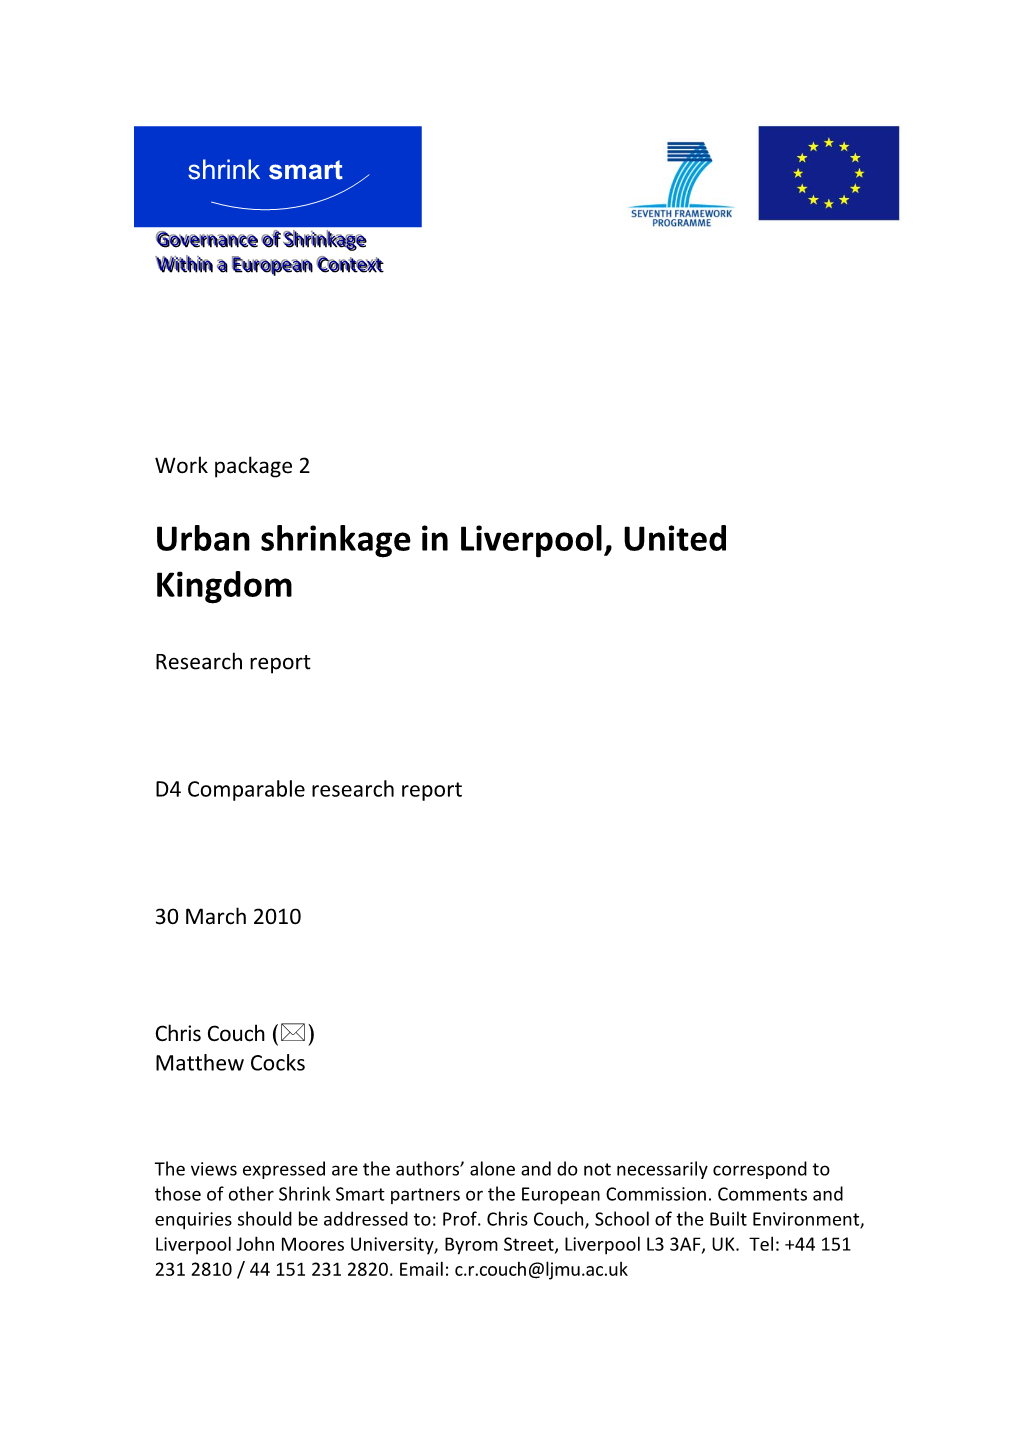 Urban Shrinkage in Liverpool, United Kingdom